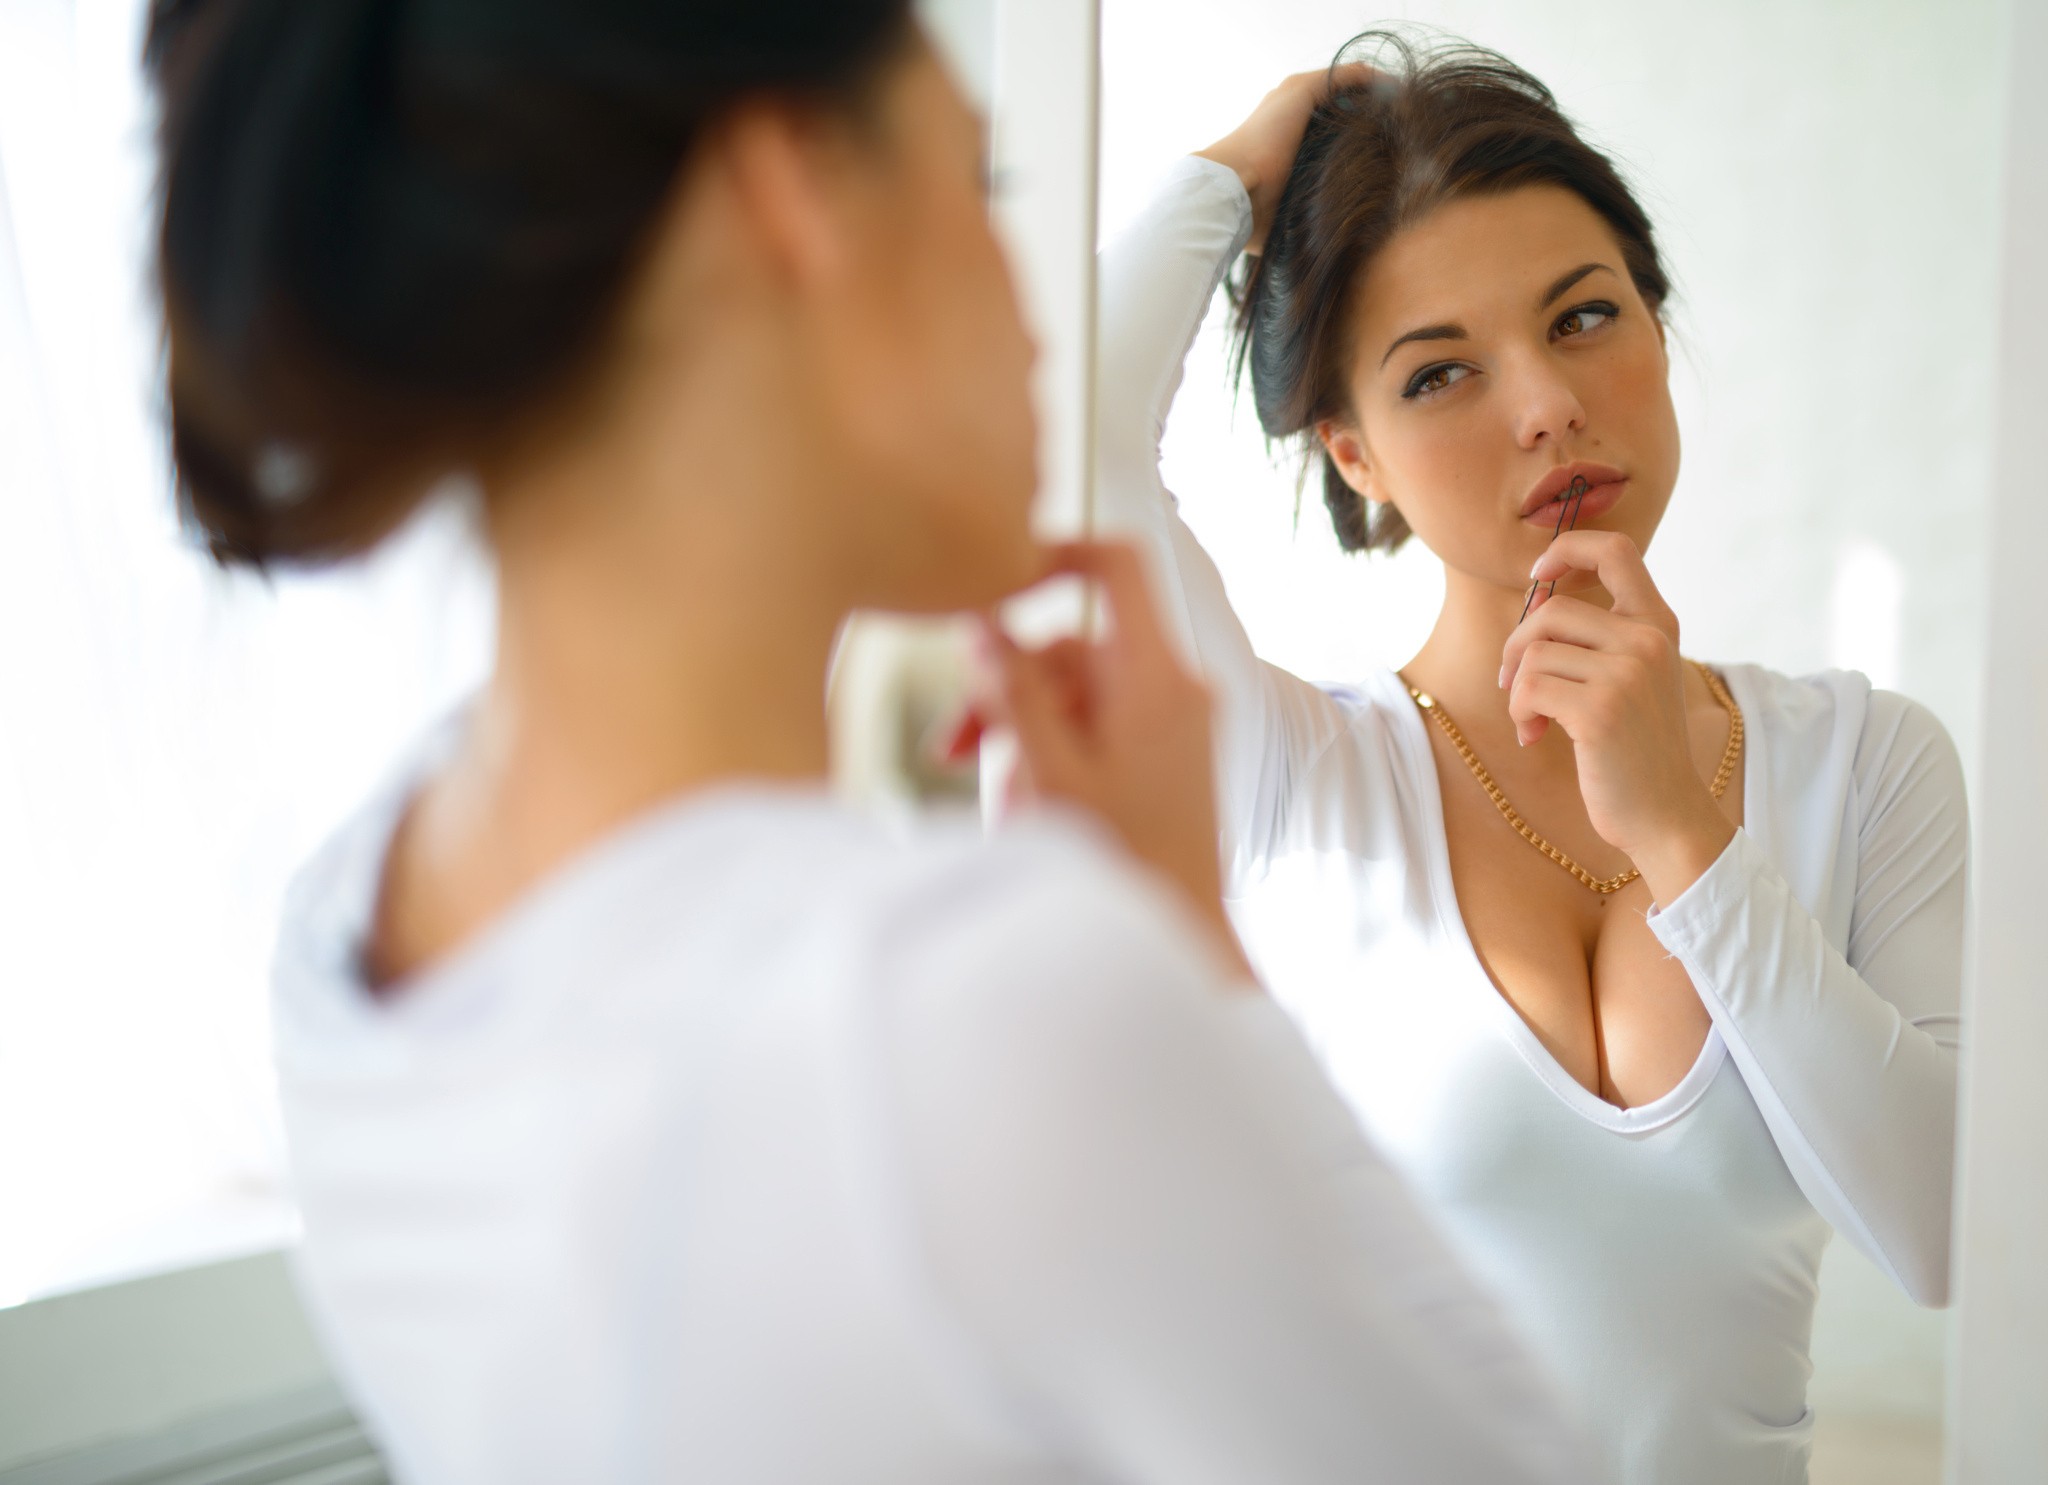 Women Marina Shimkovich Model Face Portrait Mirror Reflection Hands On Head 2048x1485